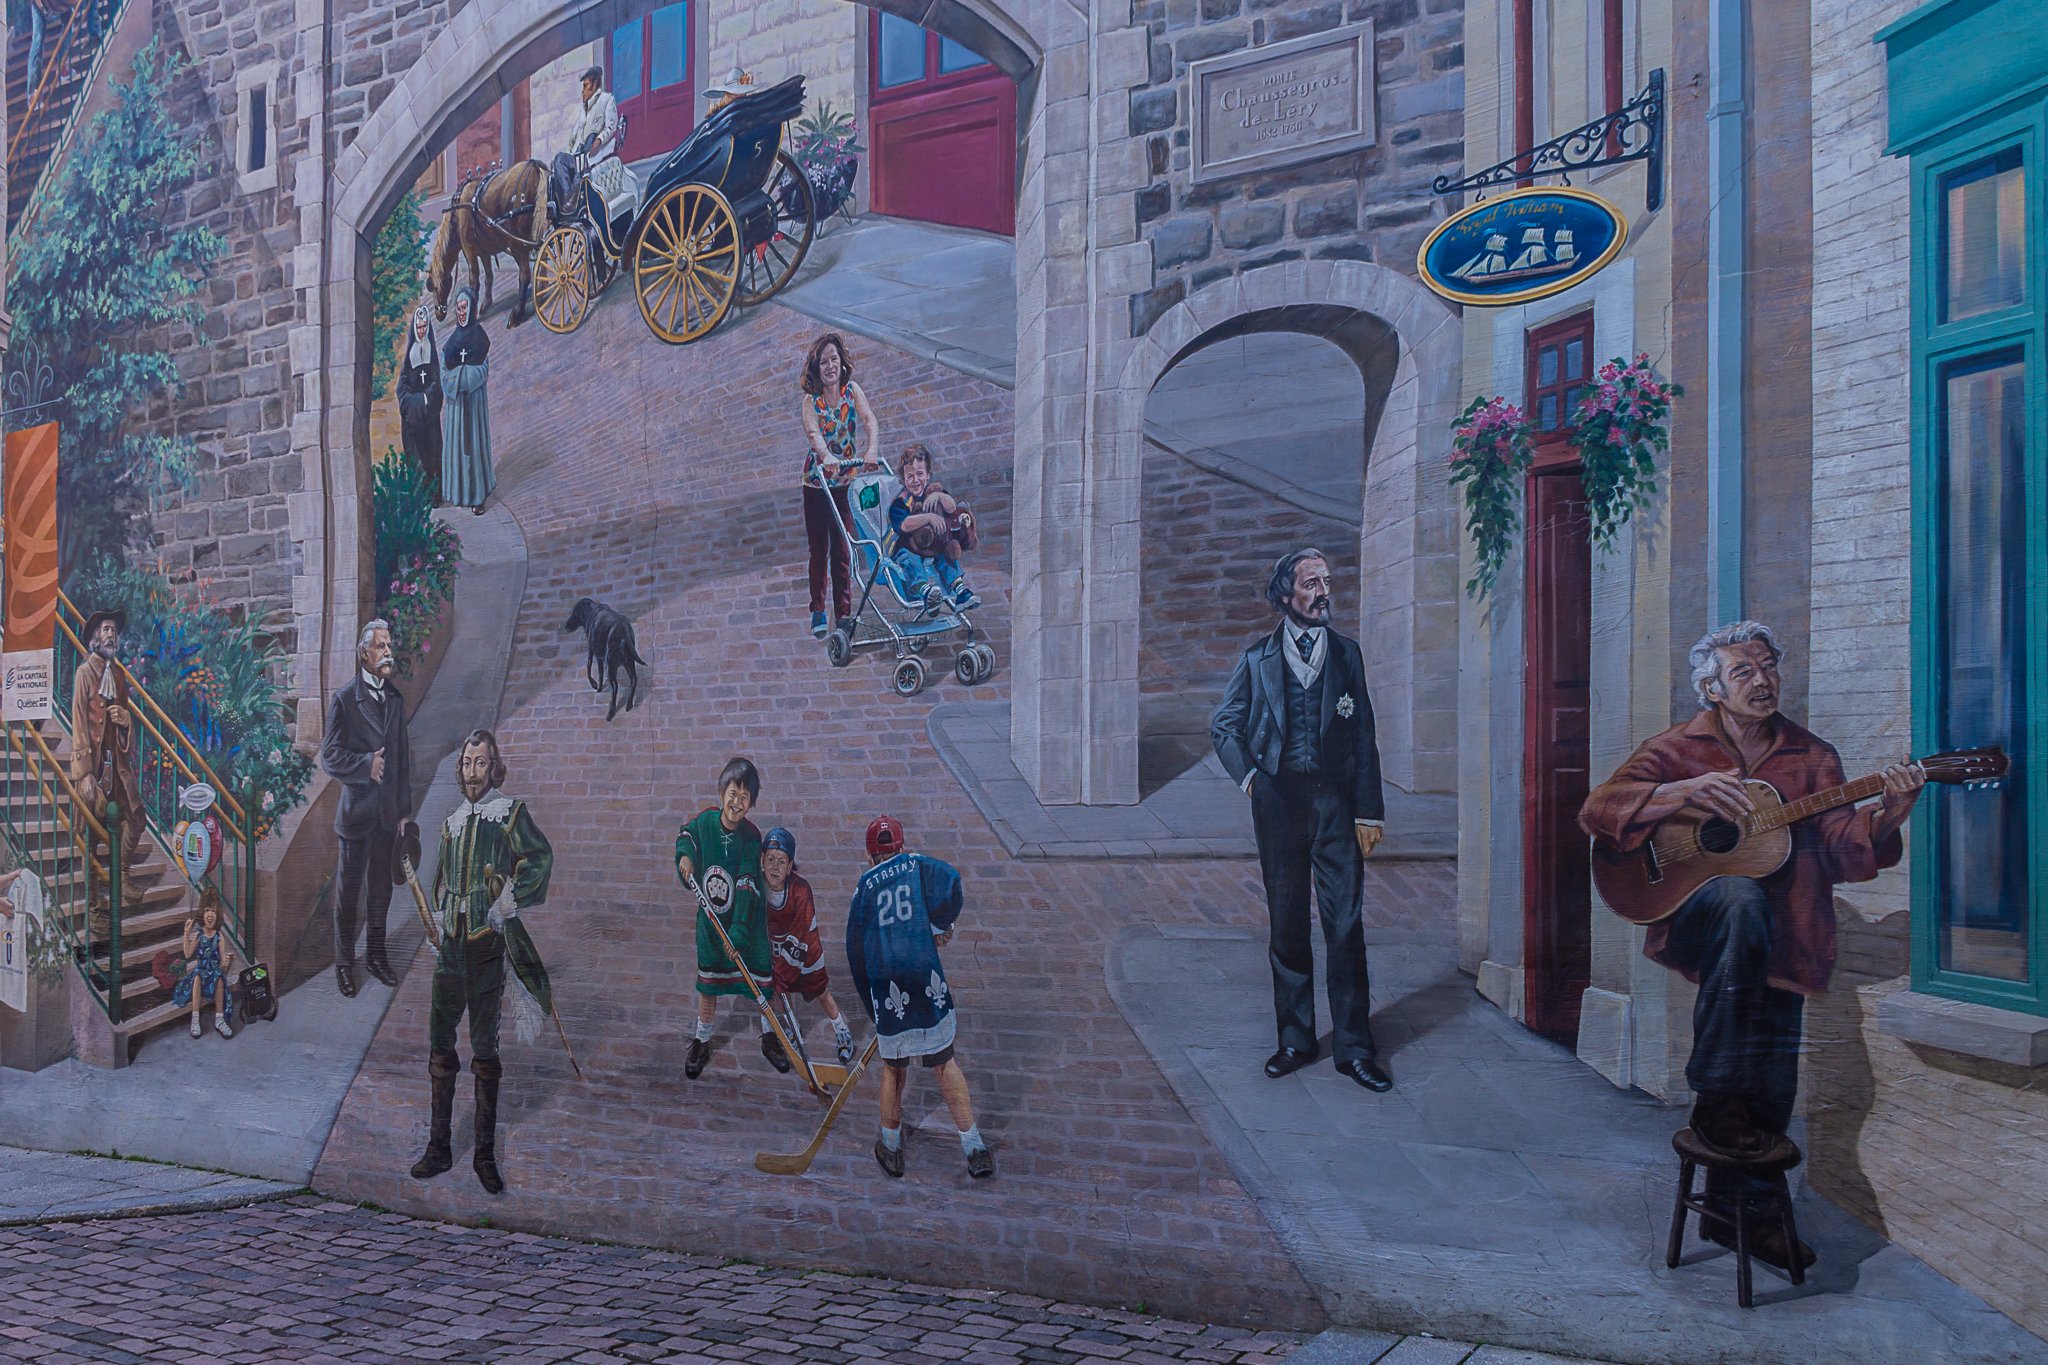 Leg 4: Historical Mural in Quebec